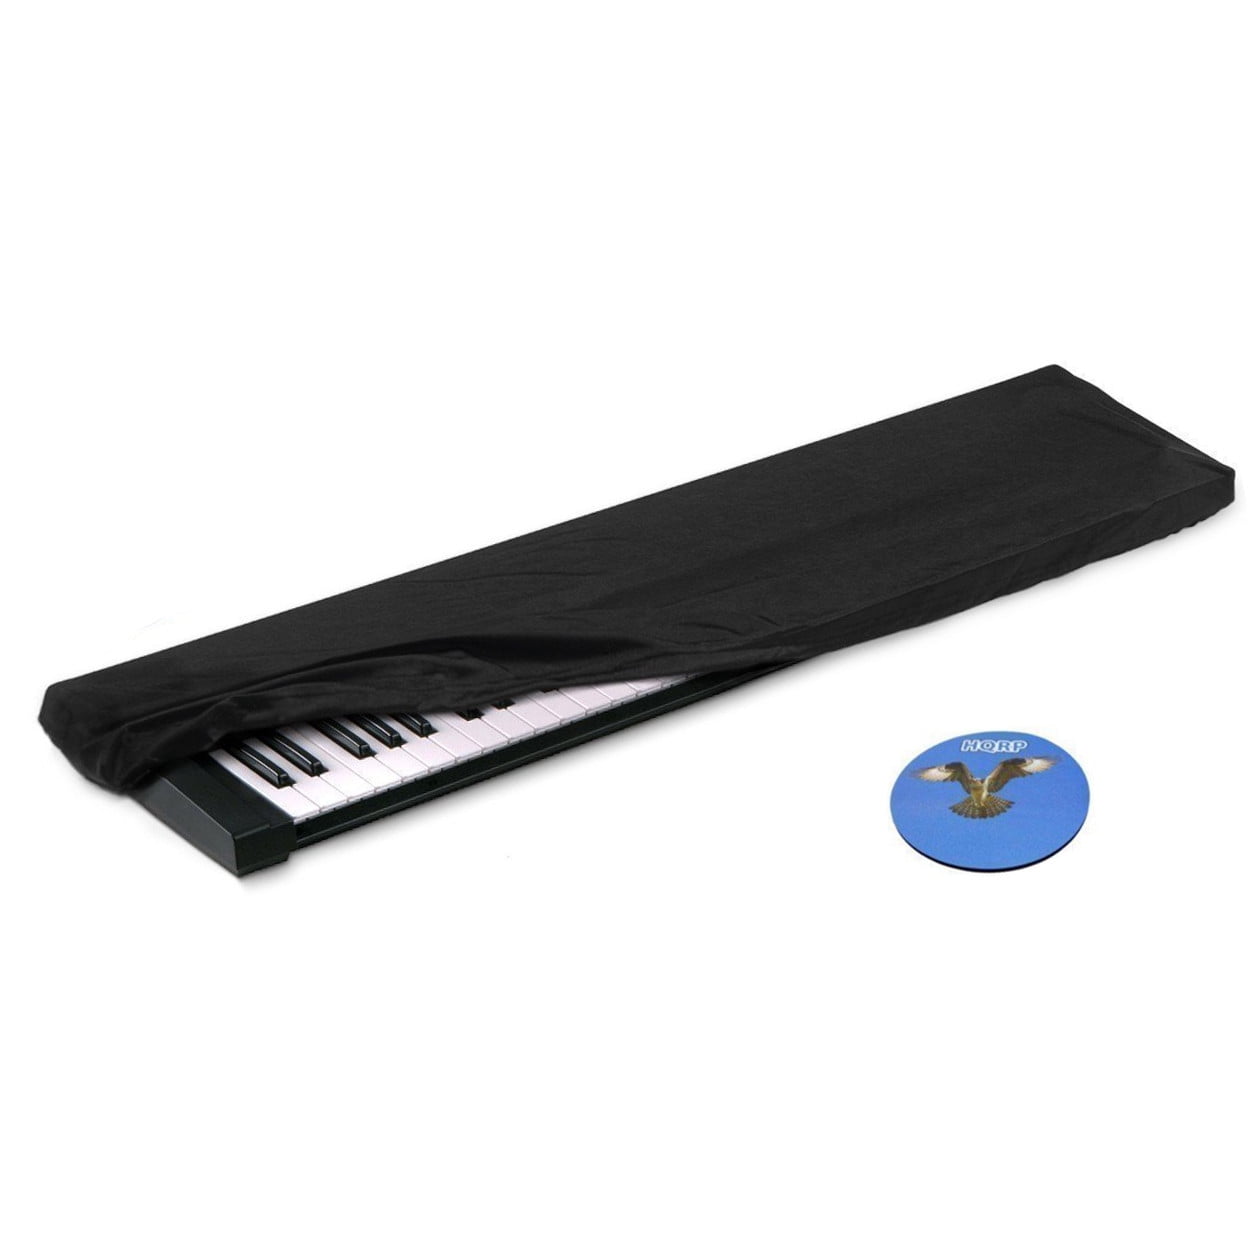 Premium Quality! DCFY Music Keyboard Dust Cover for Yamaha MX 88 Black Nylon 